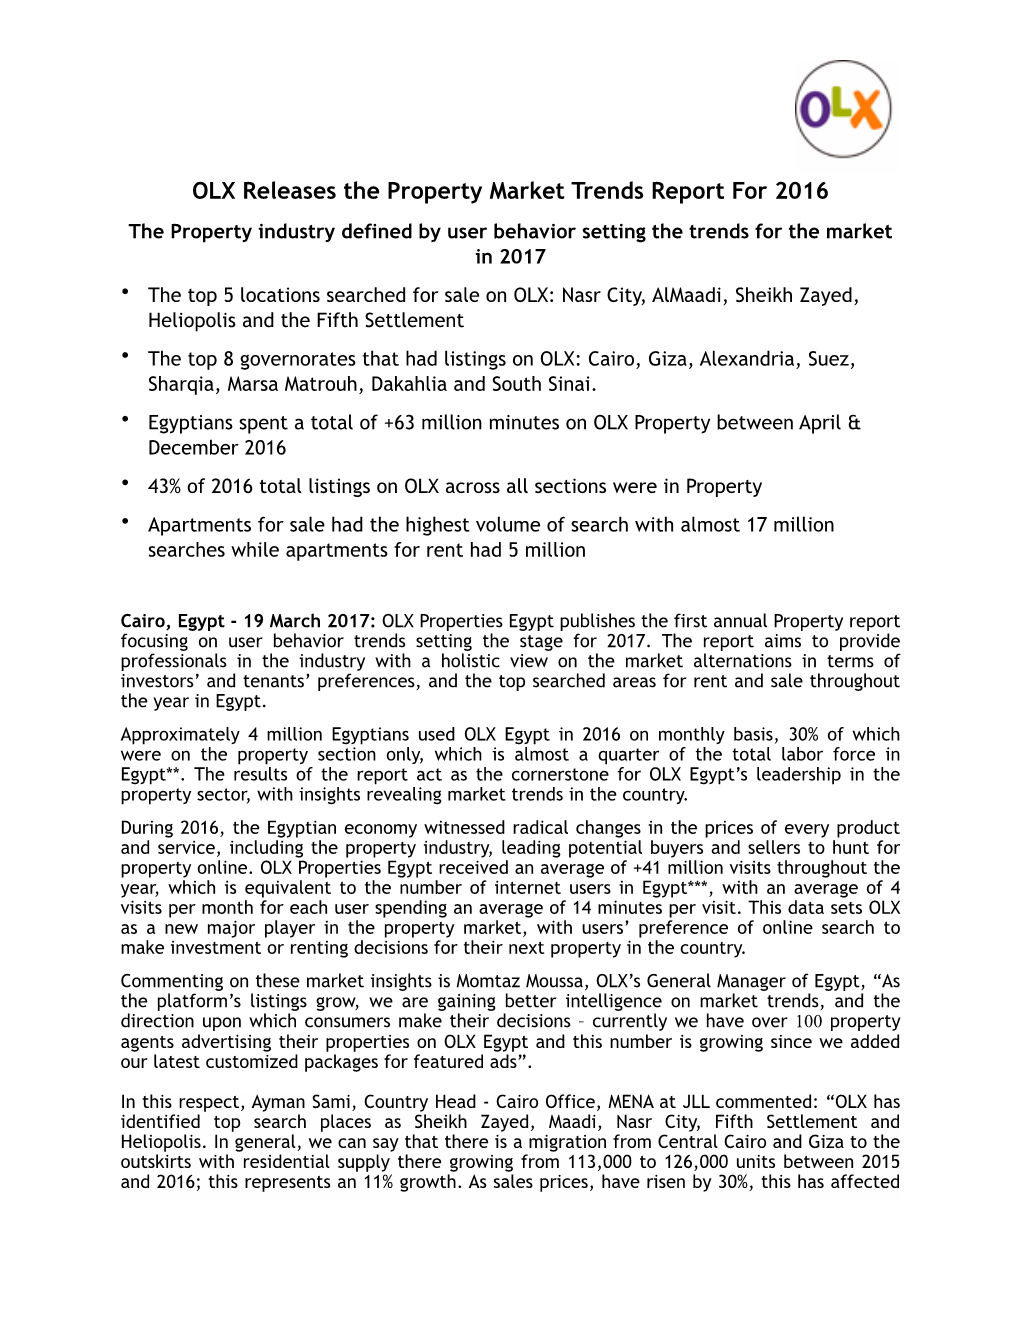 OLX Property Market Report 2016